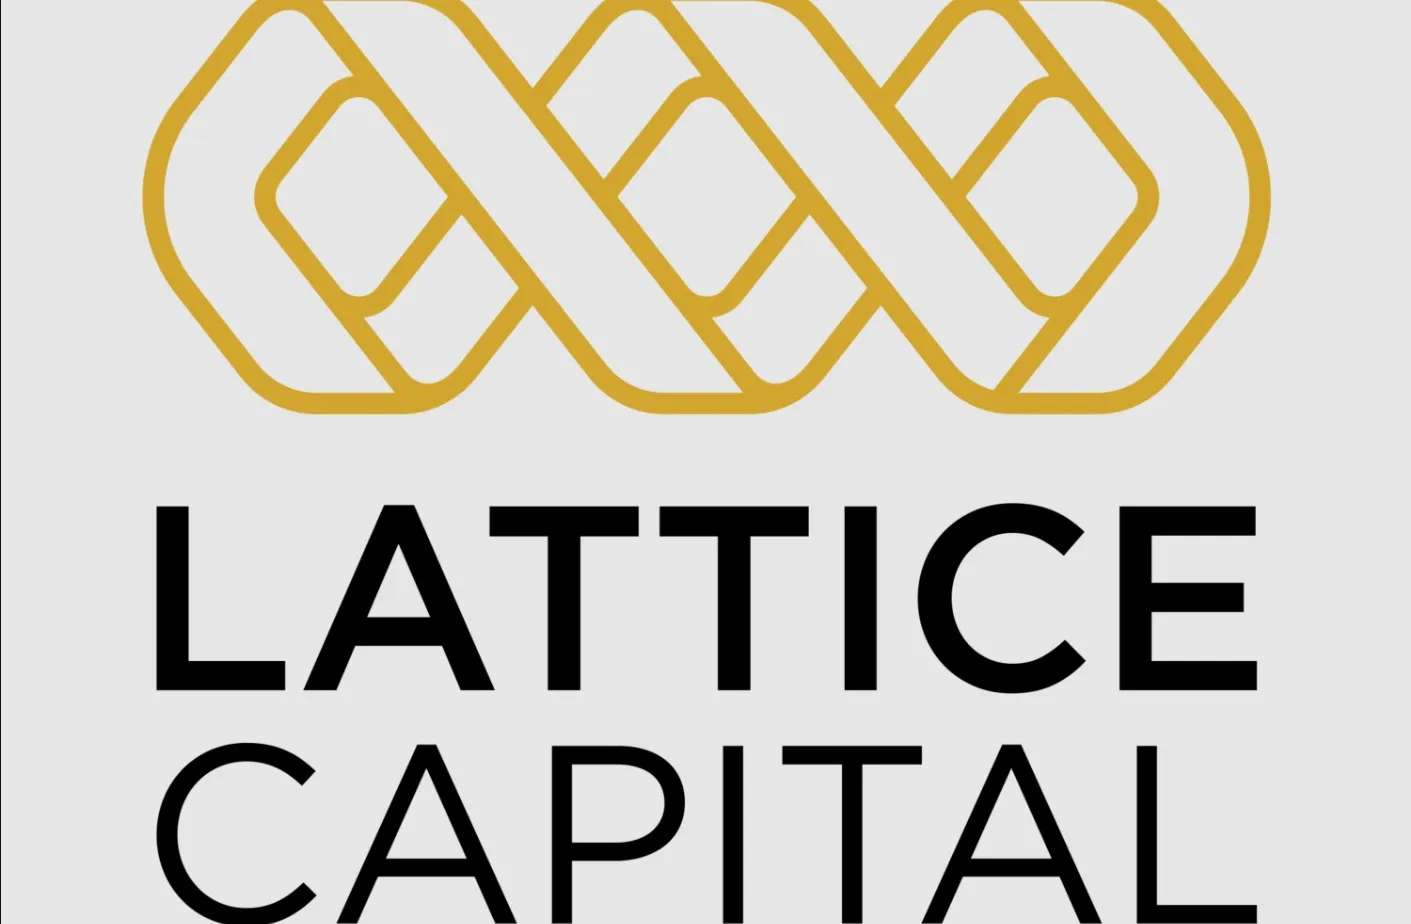 Lattice Capital